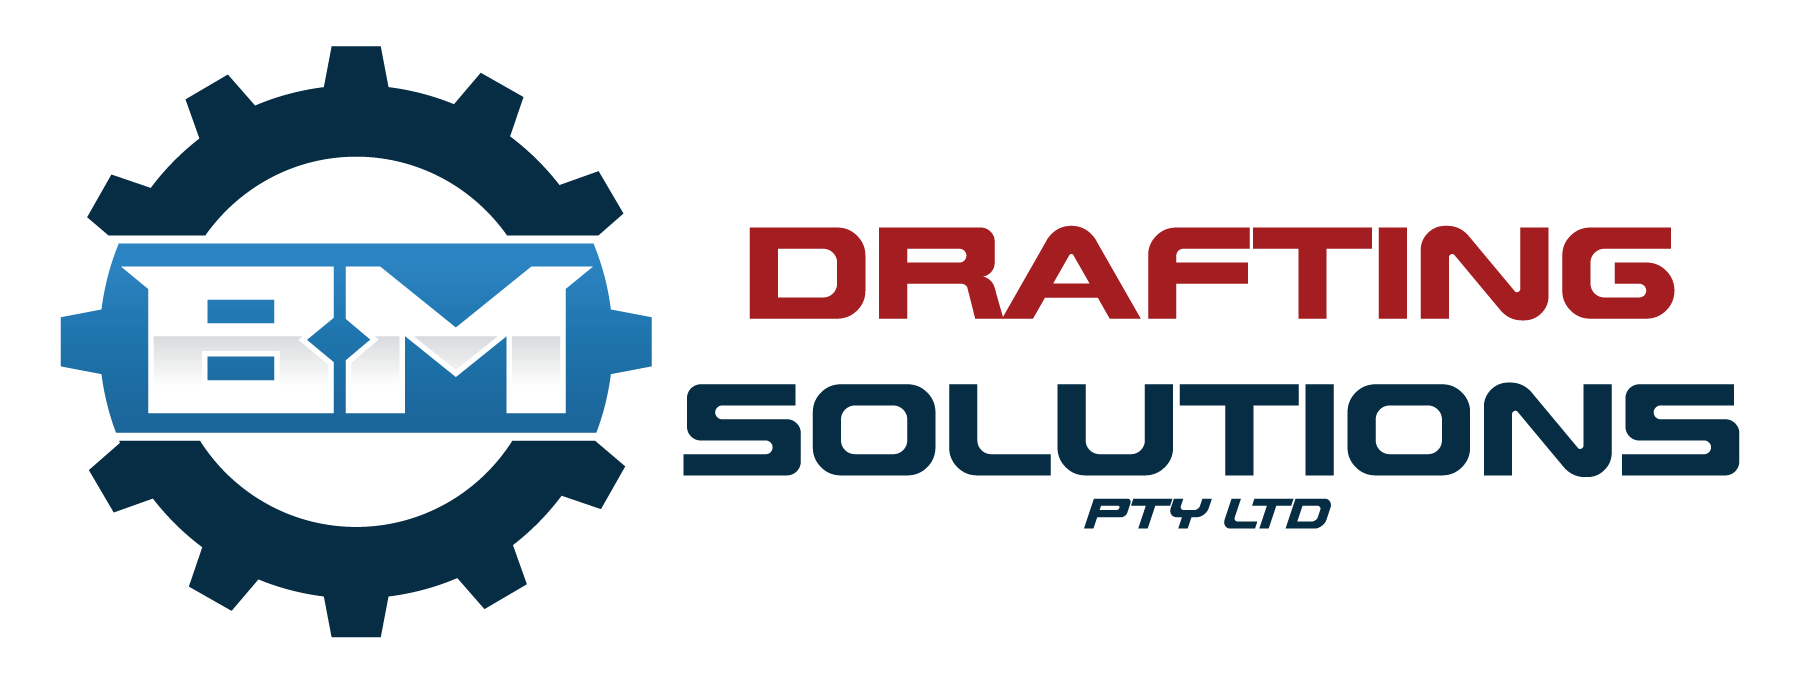 BM Drafting Solutions